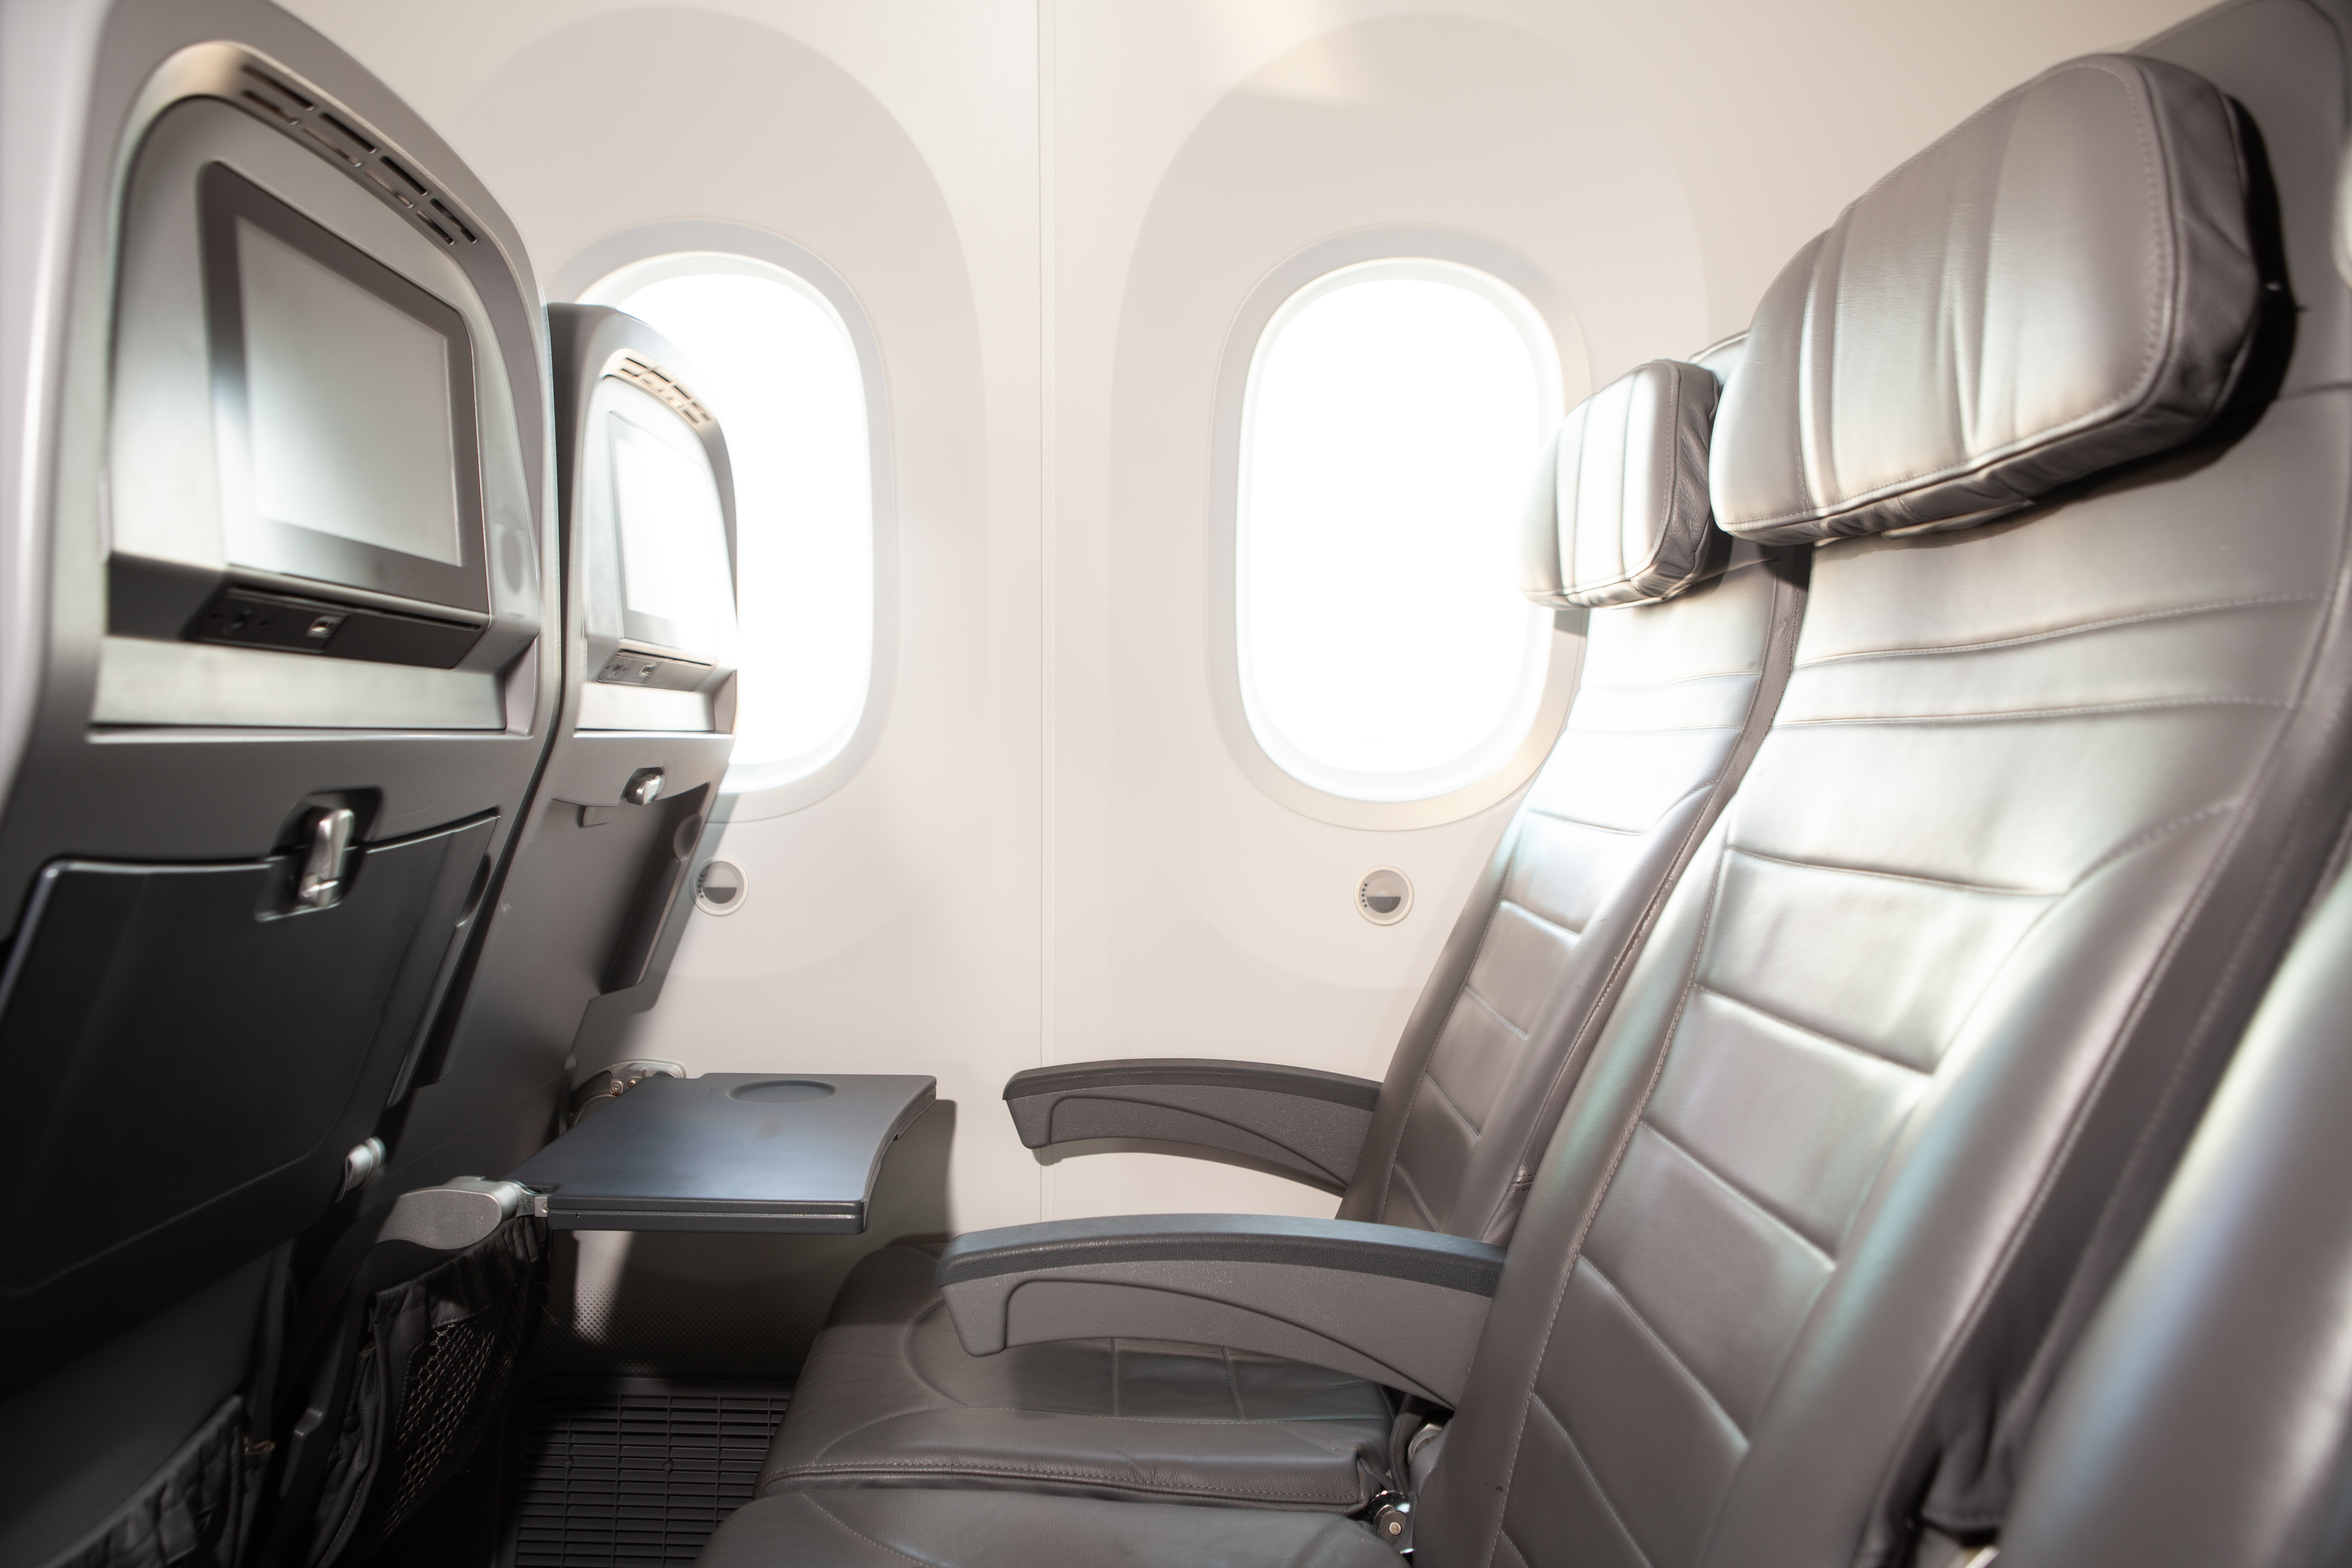 Flight attendant shares unusual item passengers steal from plane as  'souvenir'- 'serious!', Travel News, Travel